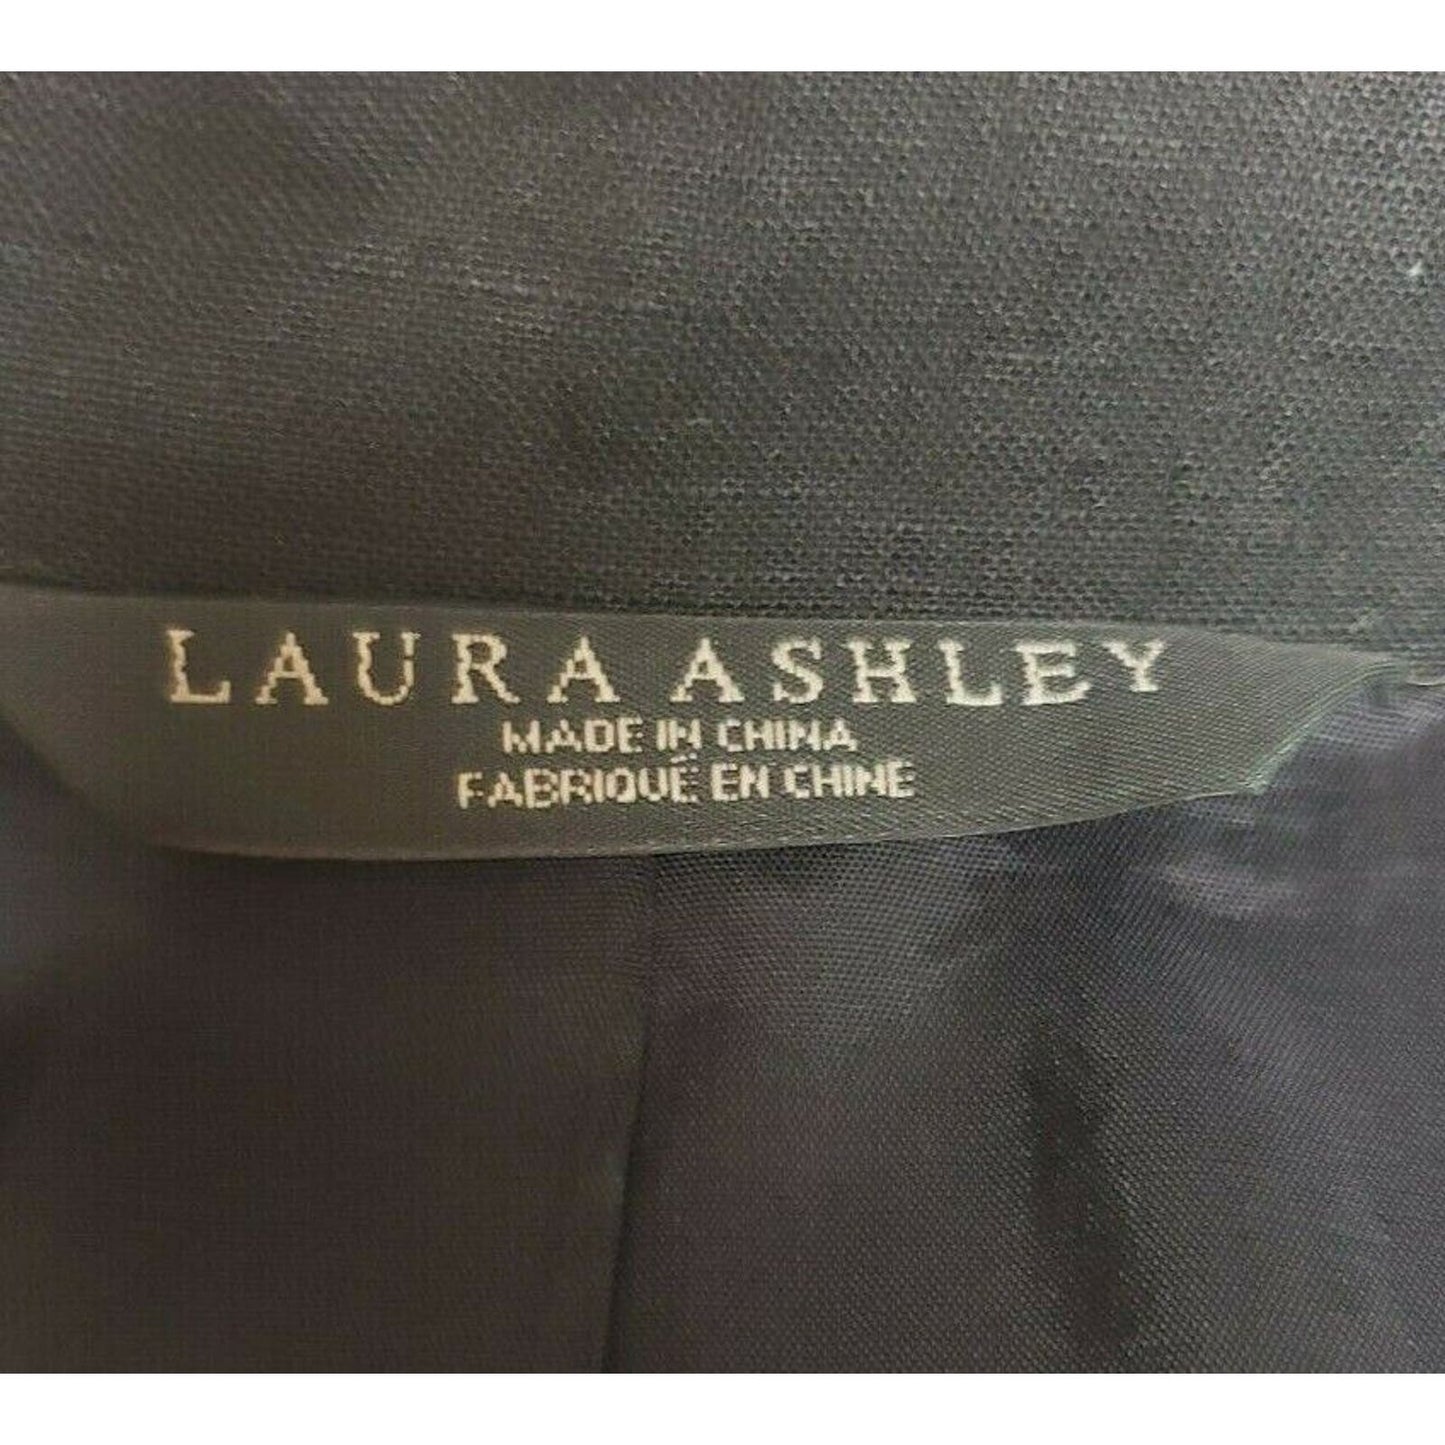 Laura Ashley sz 6 short sleeve jacket and pencil skirt suit set black 100% linen